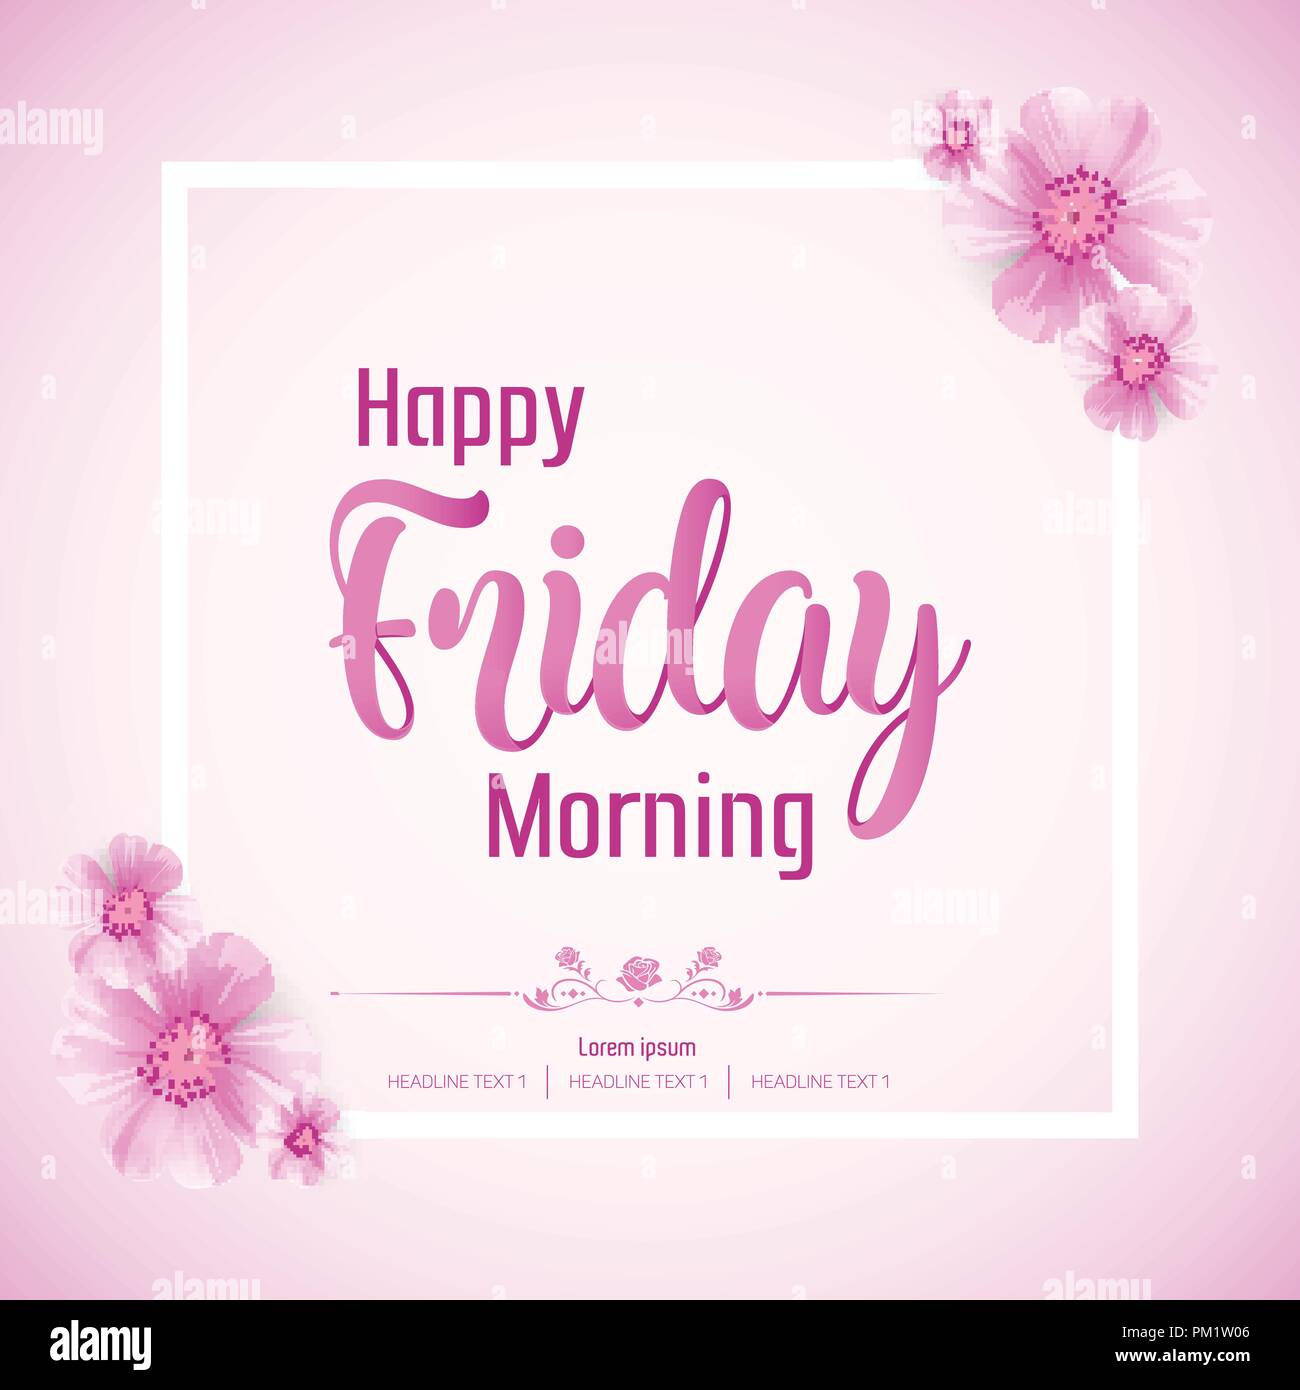 Beautiful Happy Friday Morning Vector Background Illustration ...